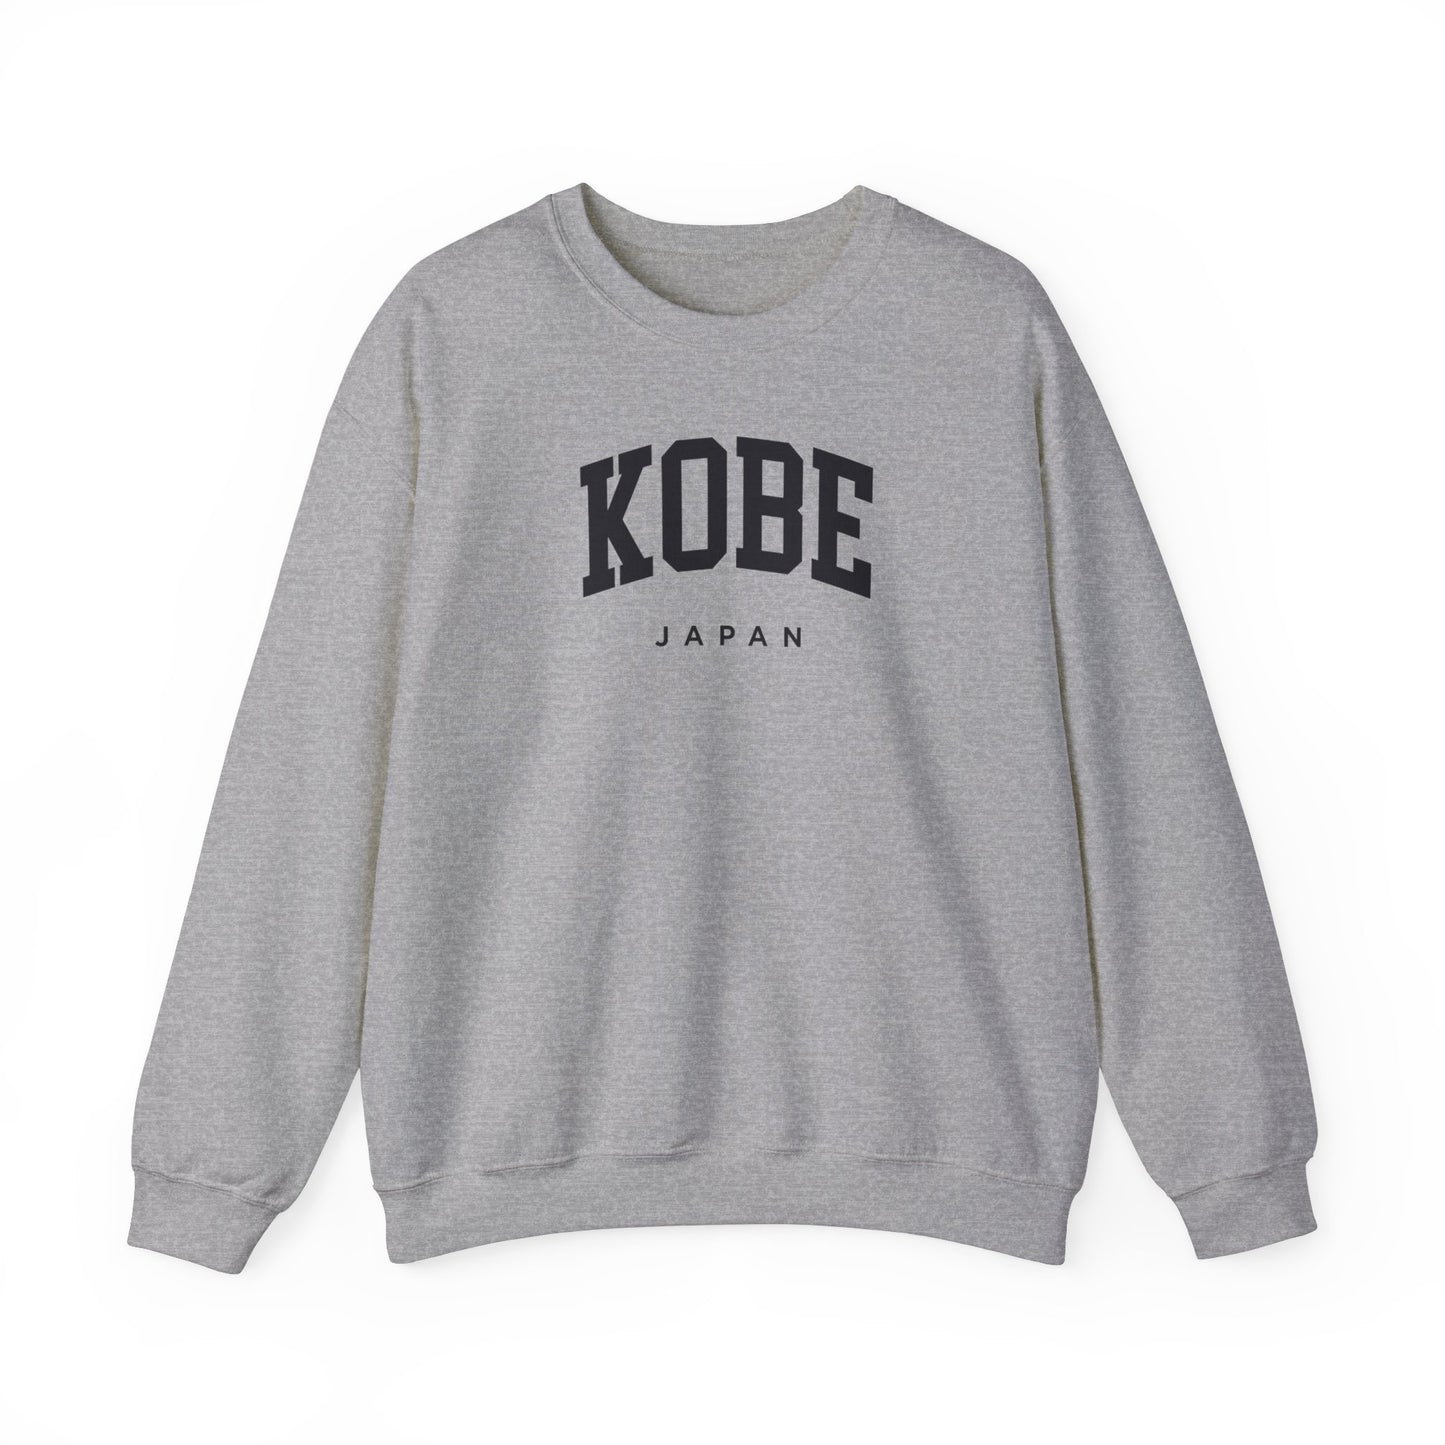 Kobe Japan Sweatshirt